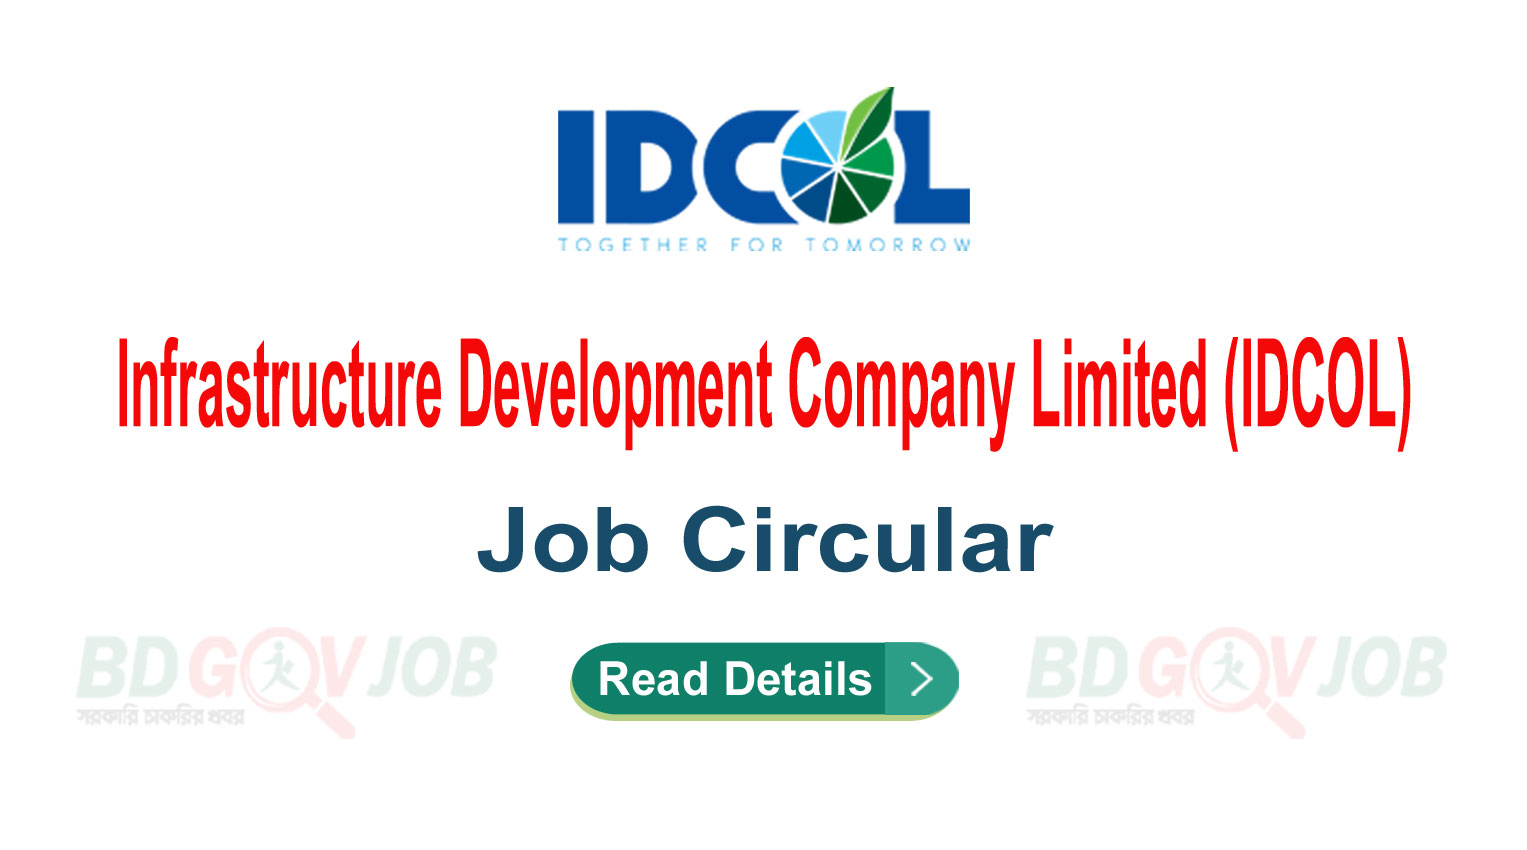 IDCOL Job Circular